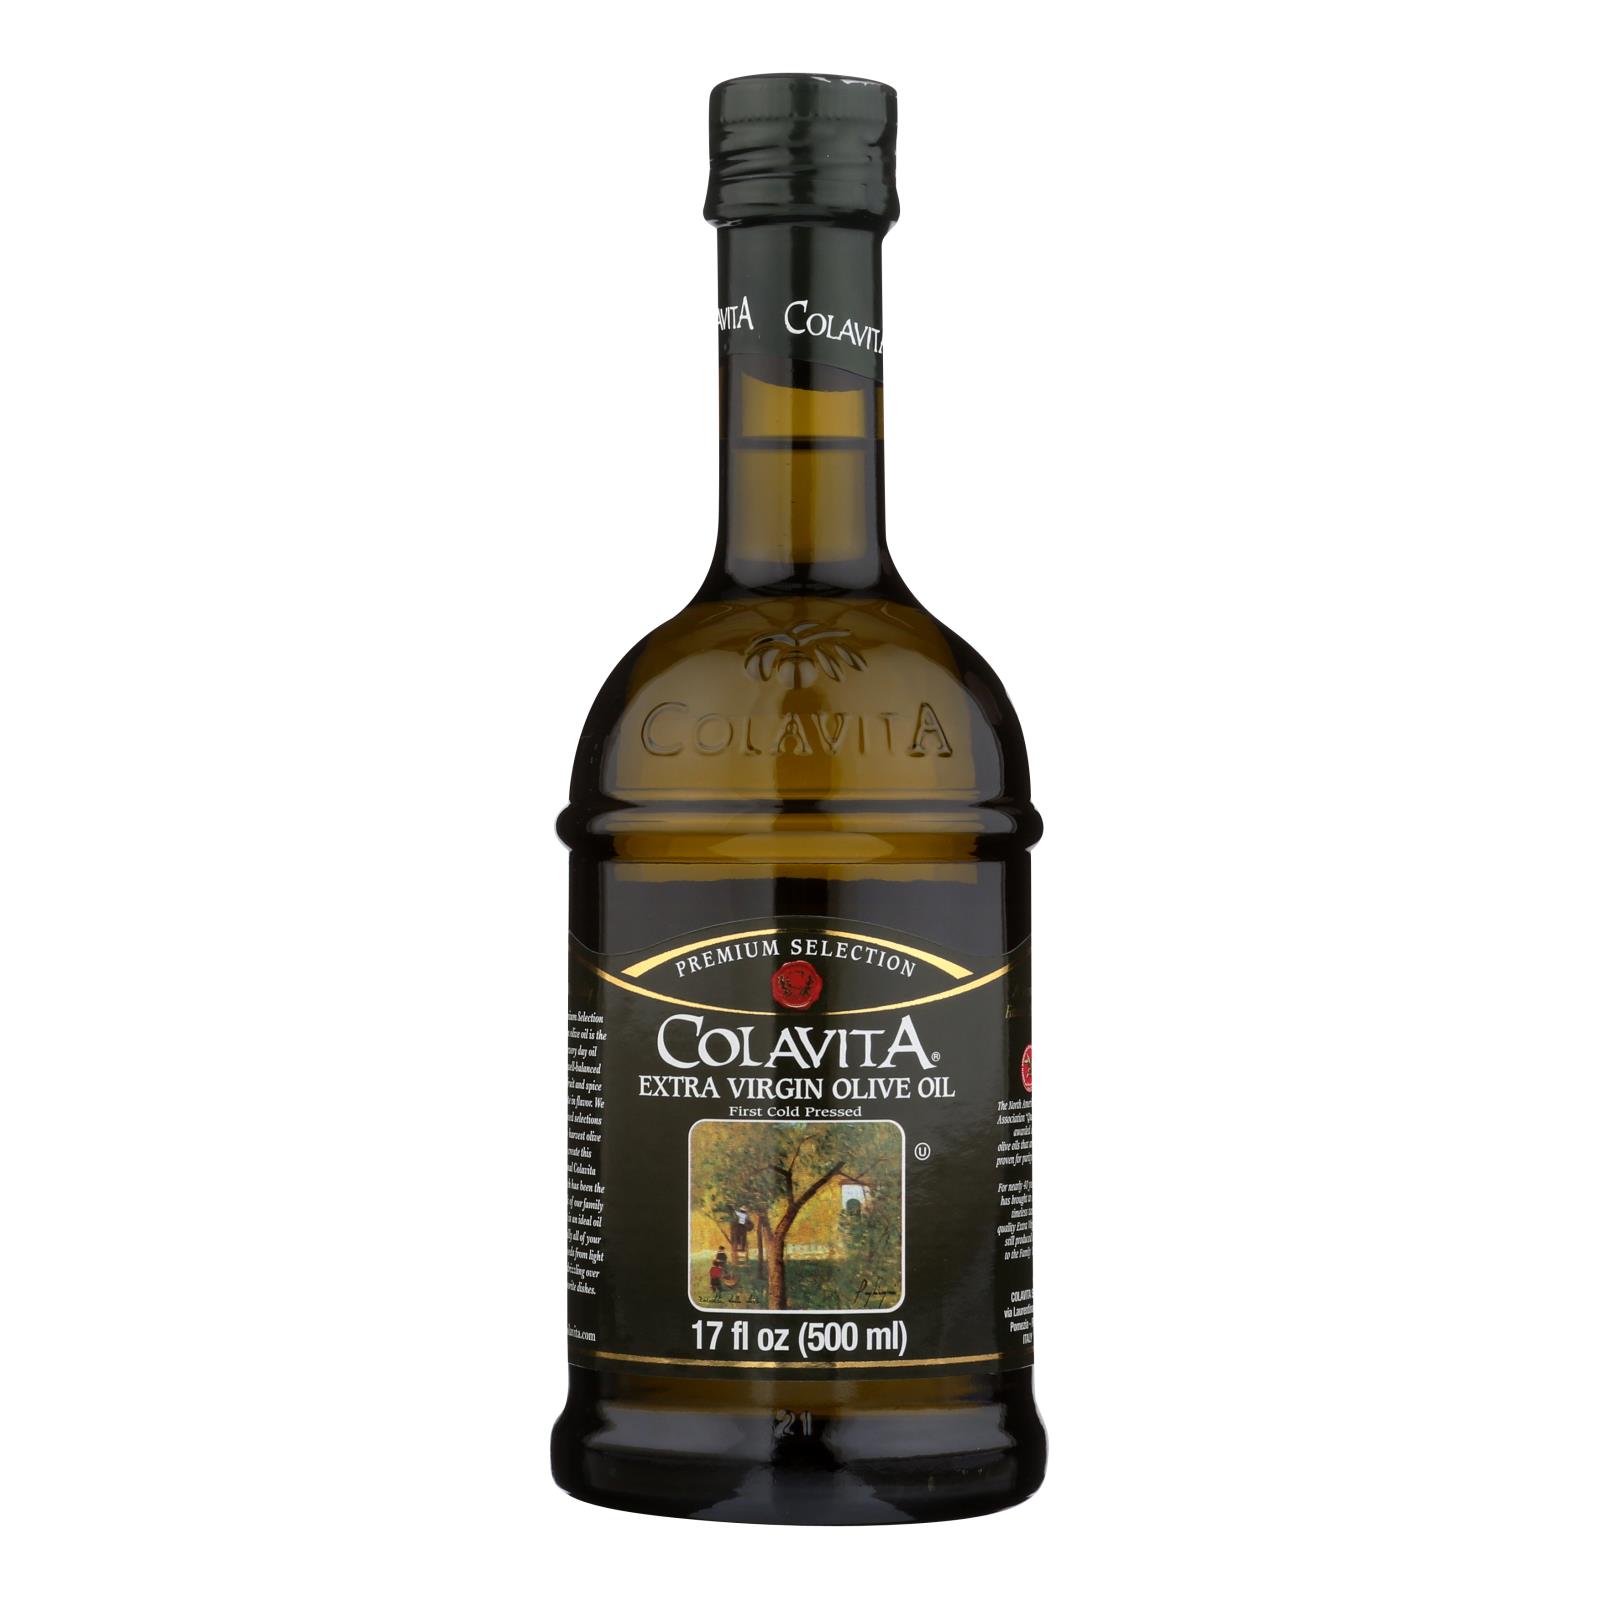 Colavita Extra Virgin Olive Oil Premium Selection - Case of 6 - 17 FZ